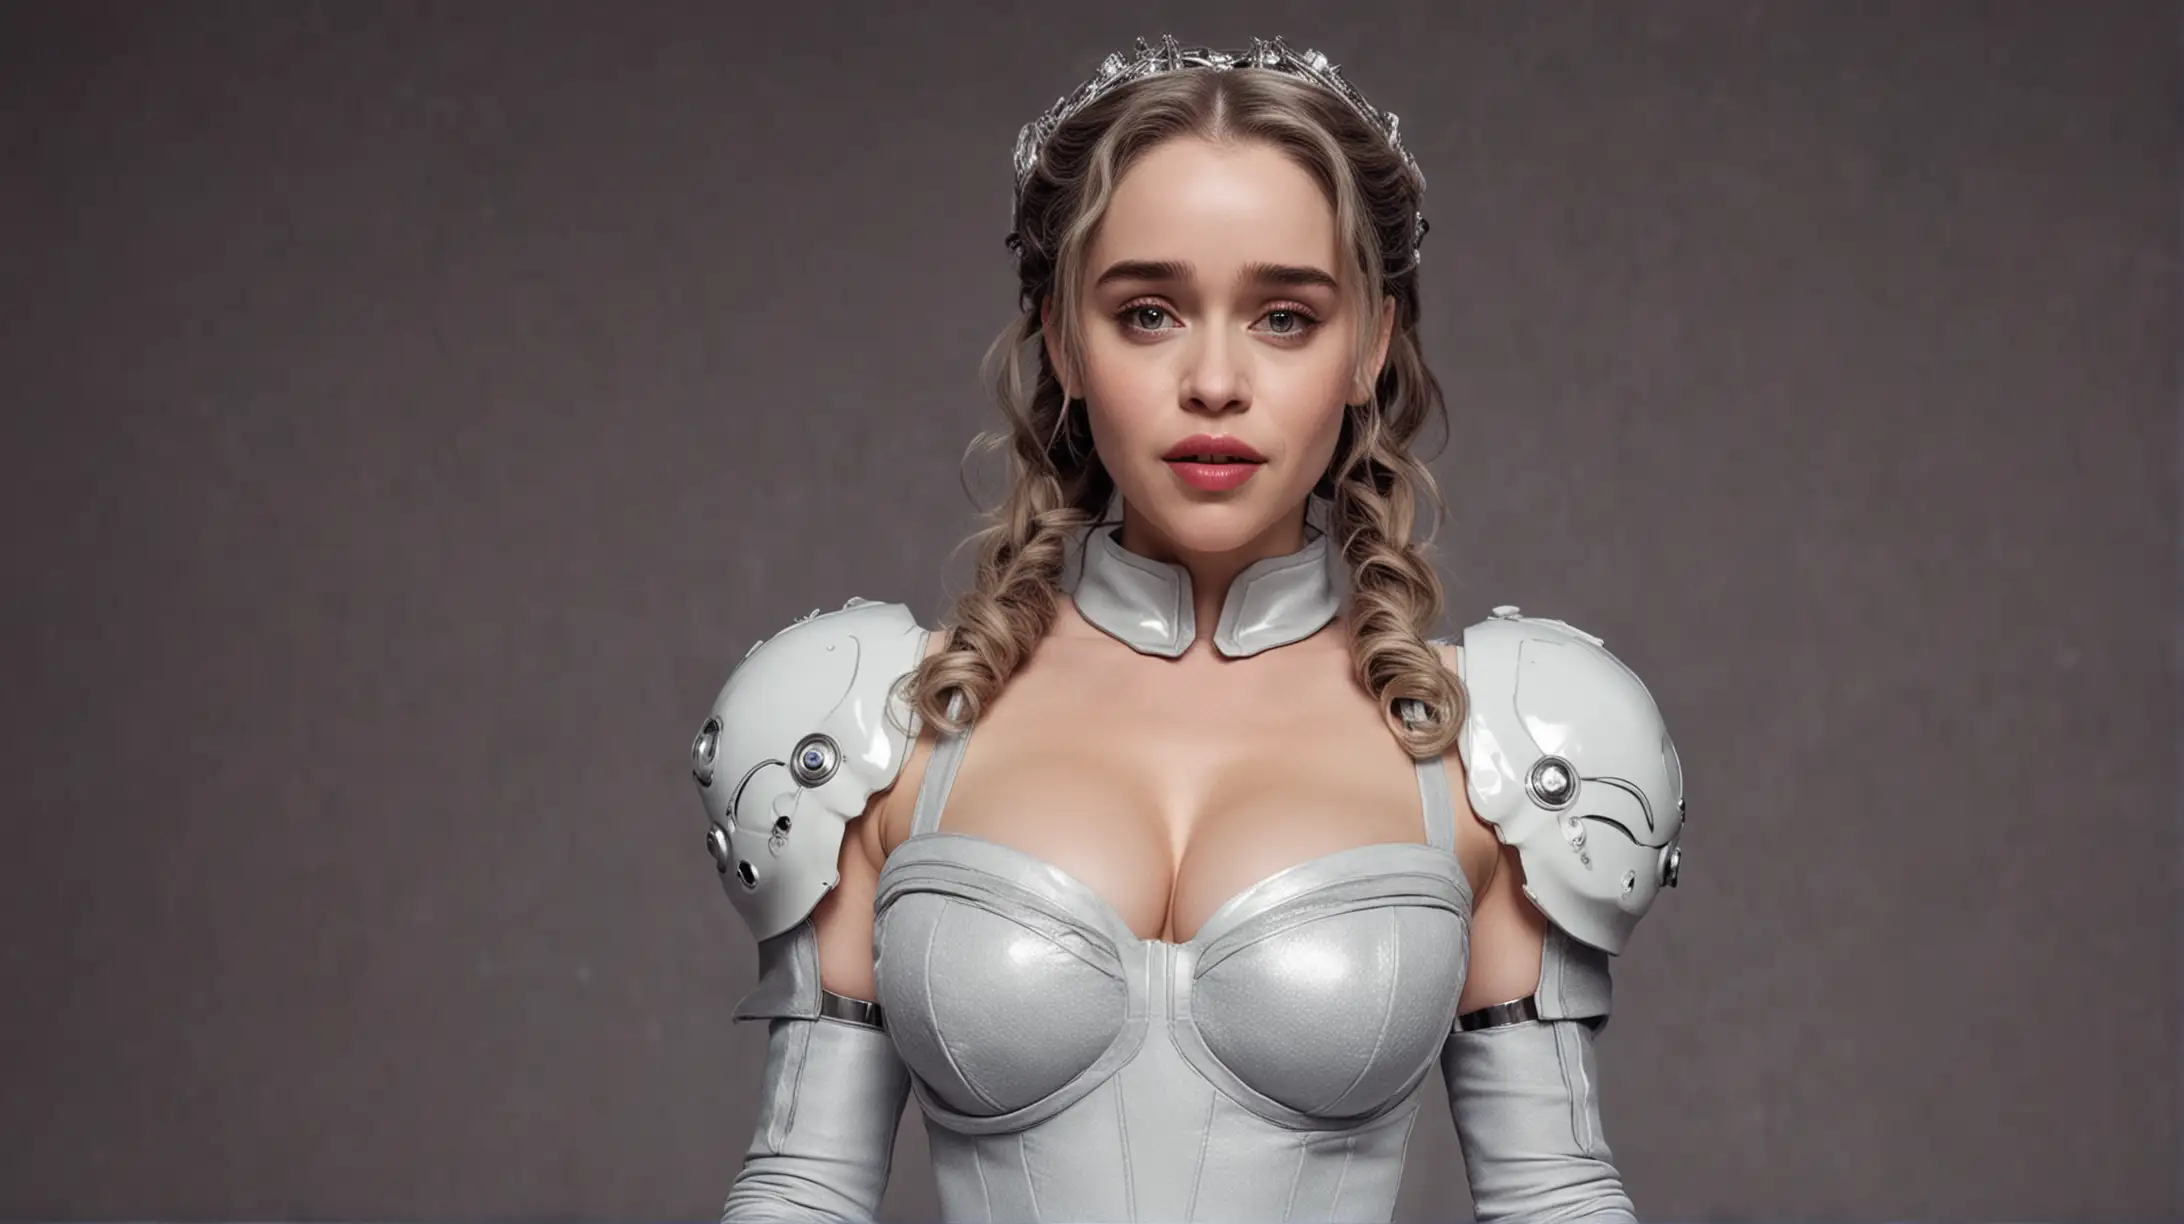 Emilia Clarke as space princess, perky figure, very big boobs, pigtails, sexy, seductive pose